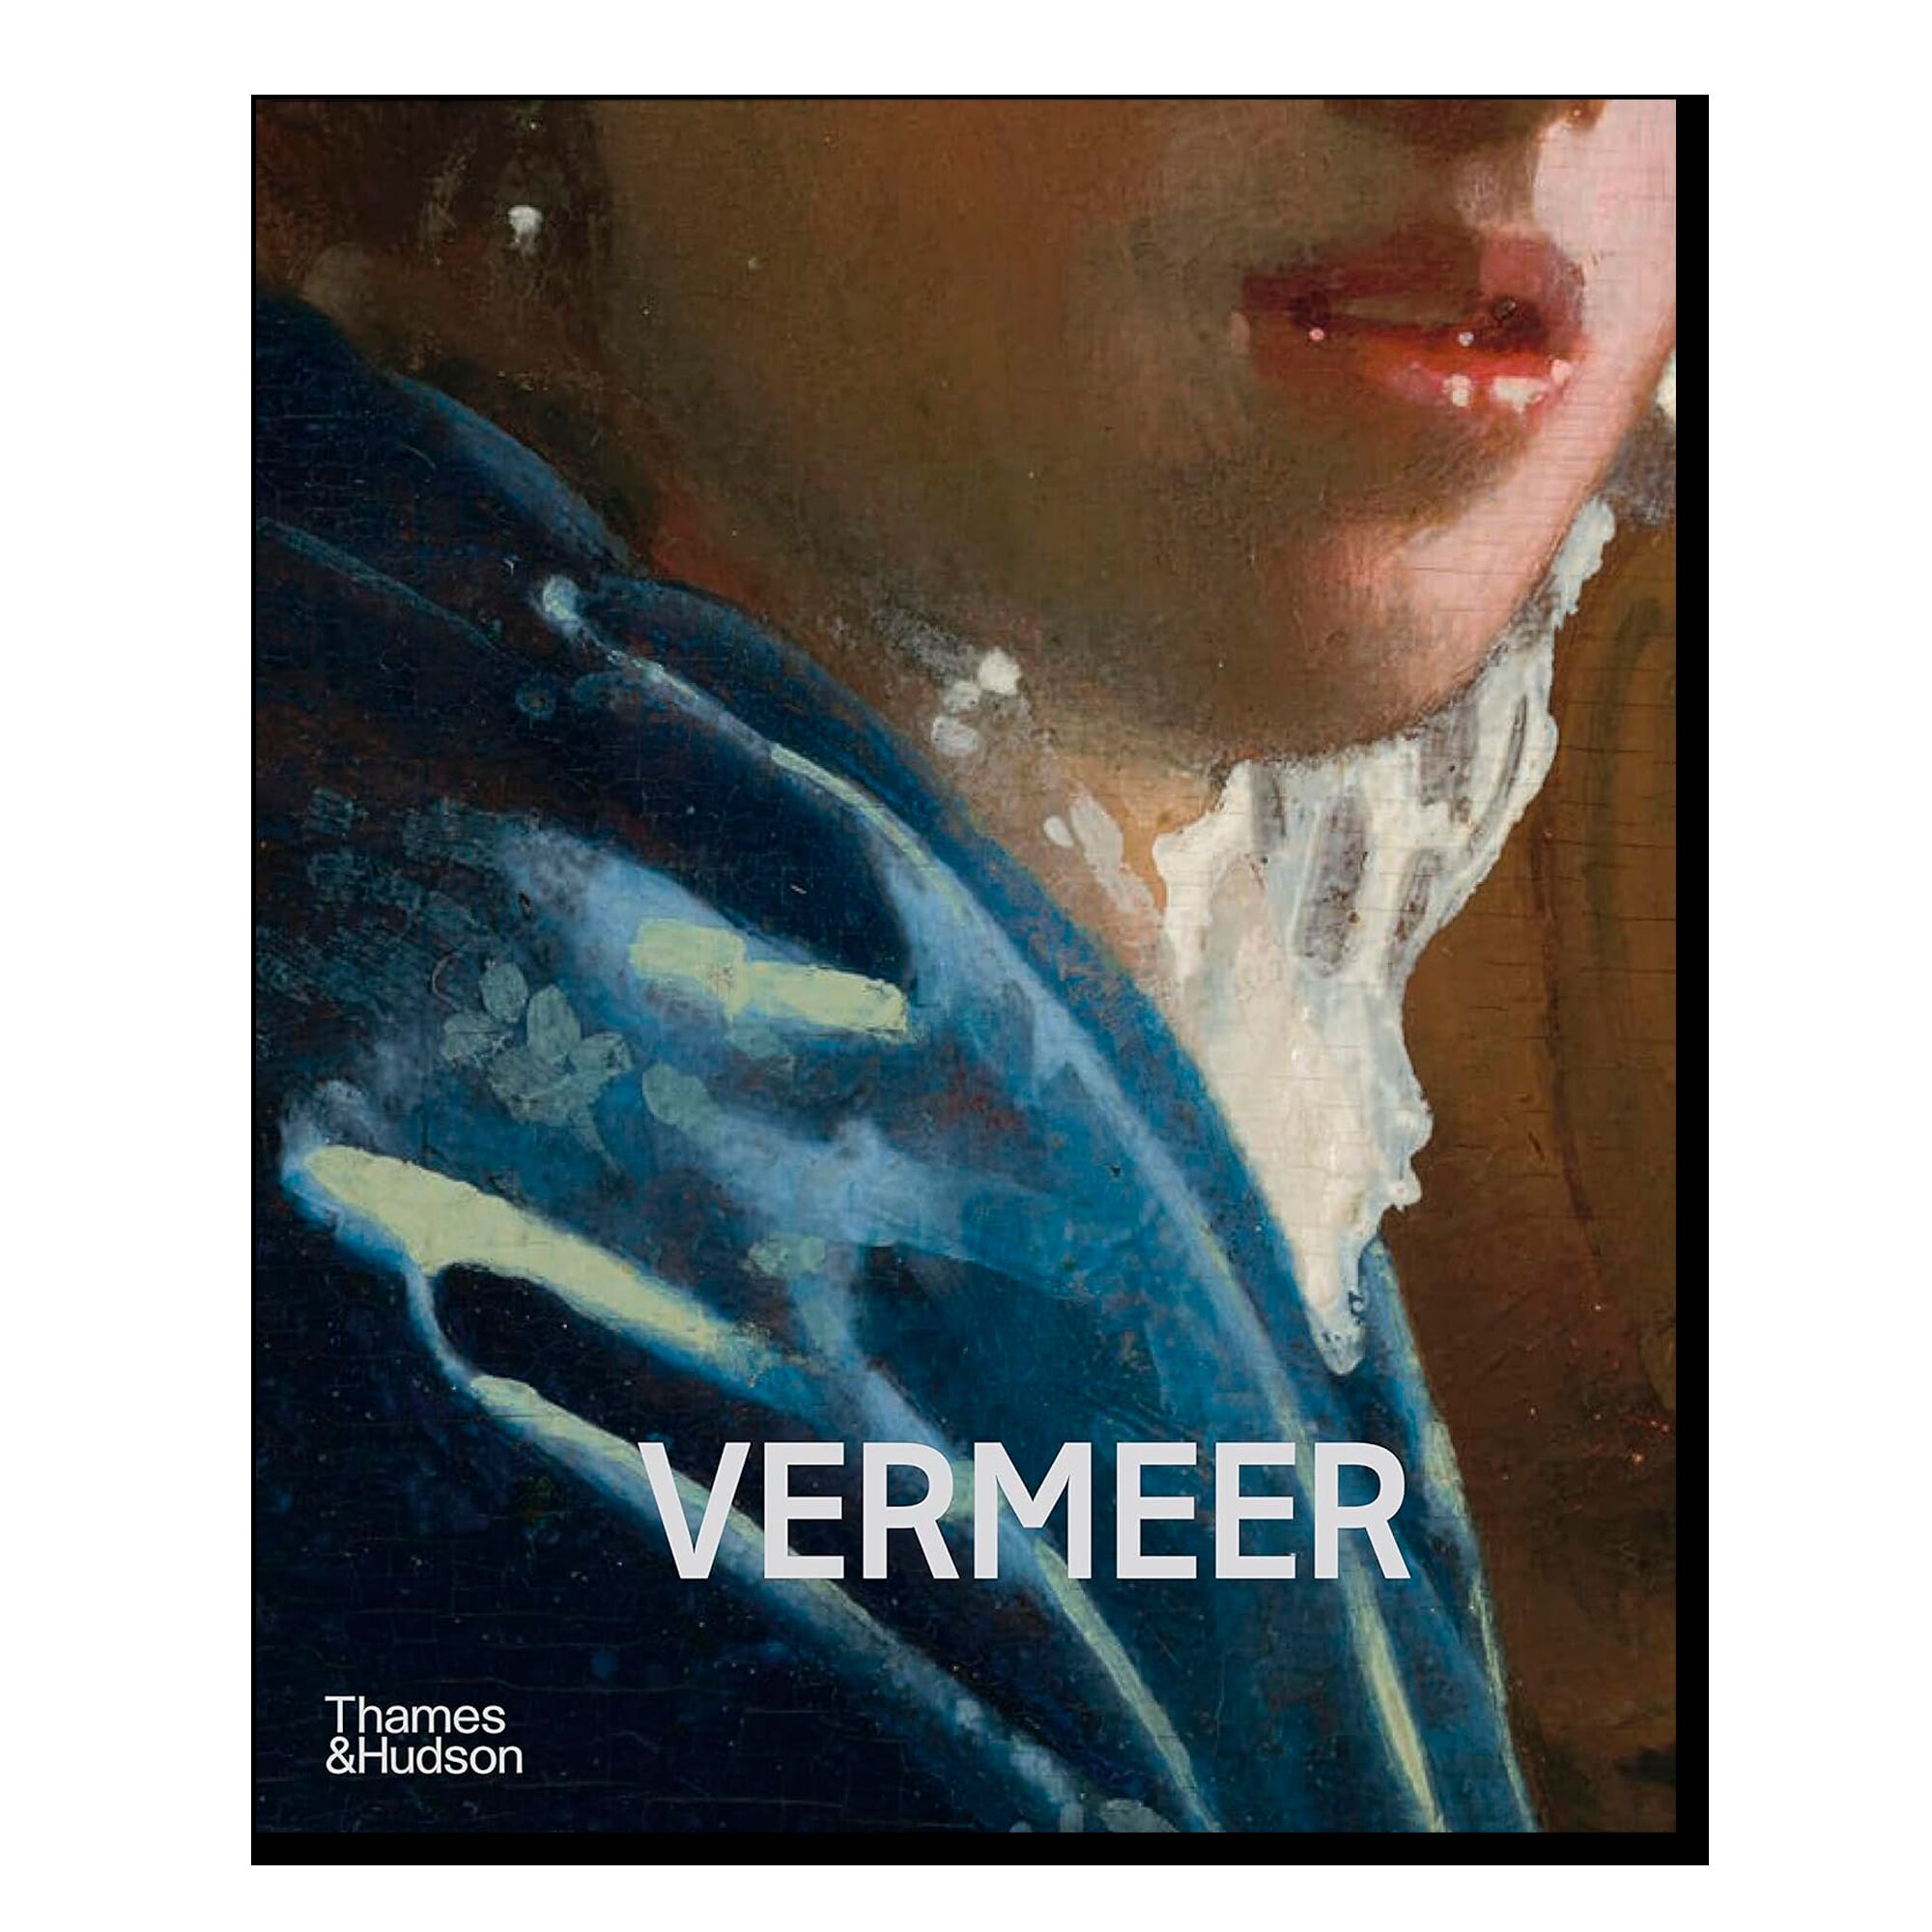 Vermeer - The Rijksmuseum's major exhibition catalogue